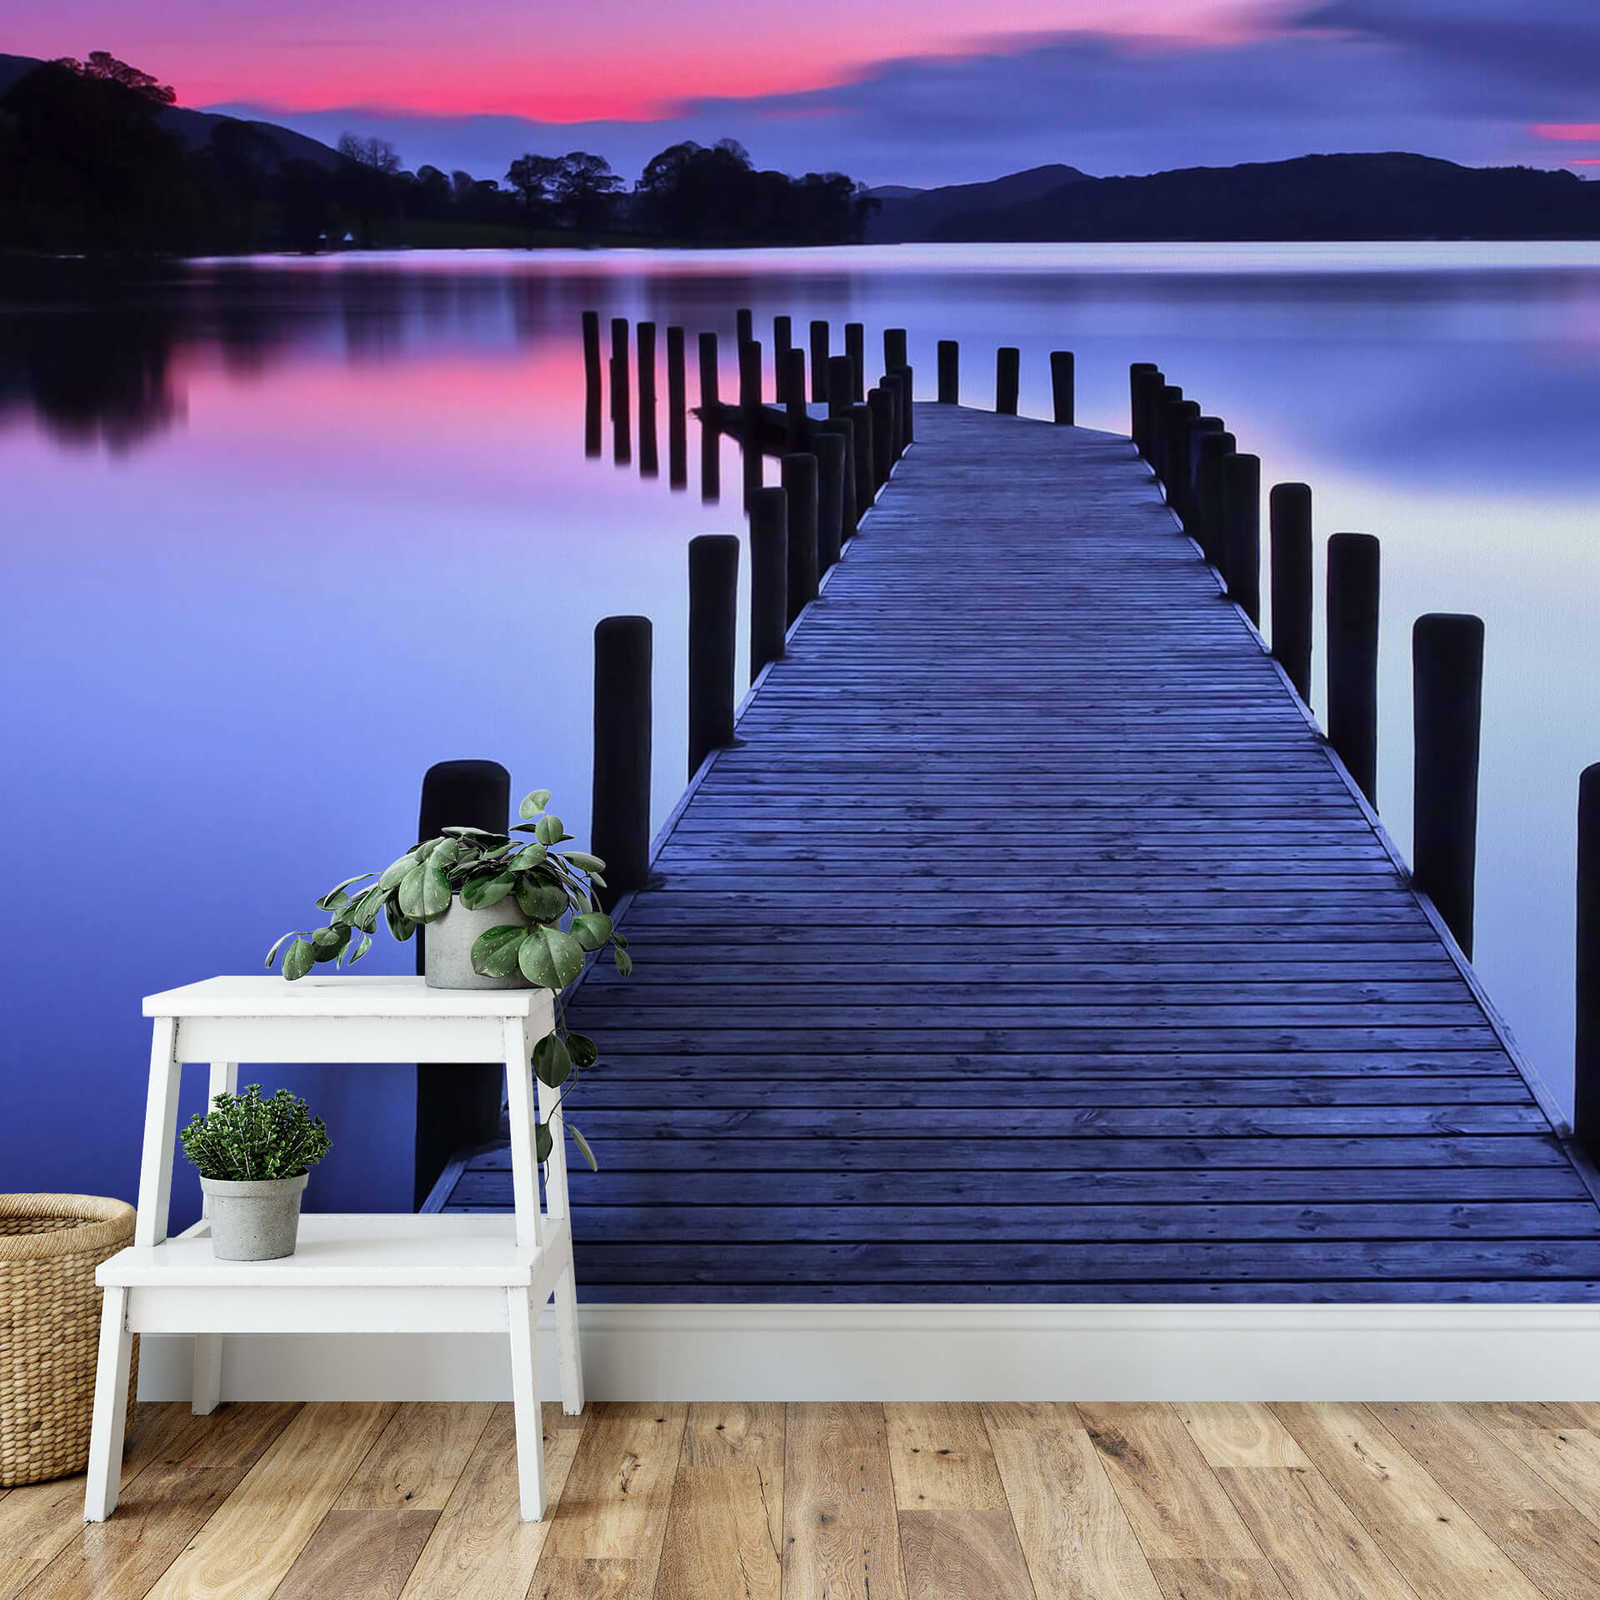             Photo wallpaper sunset on the lake with bridge
        